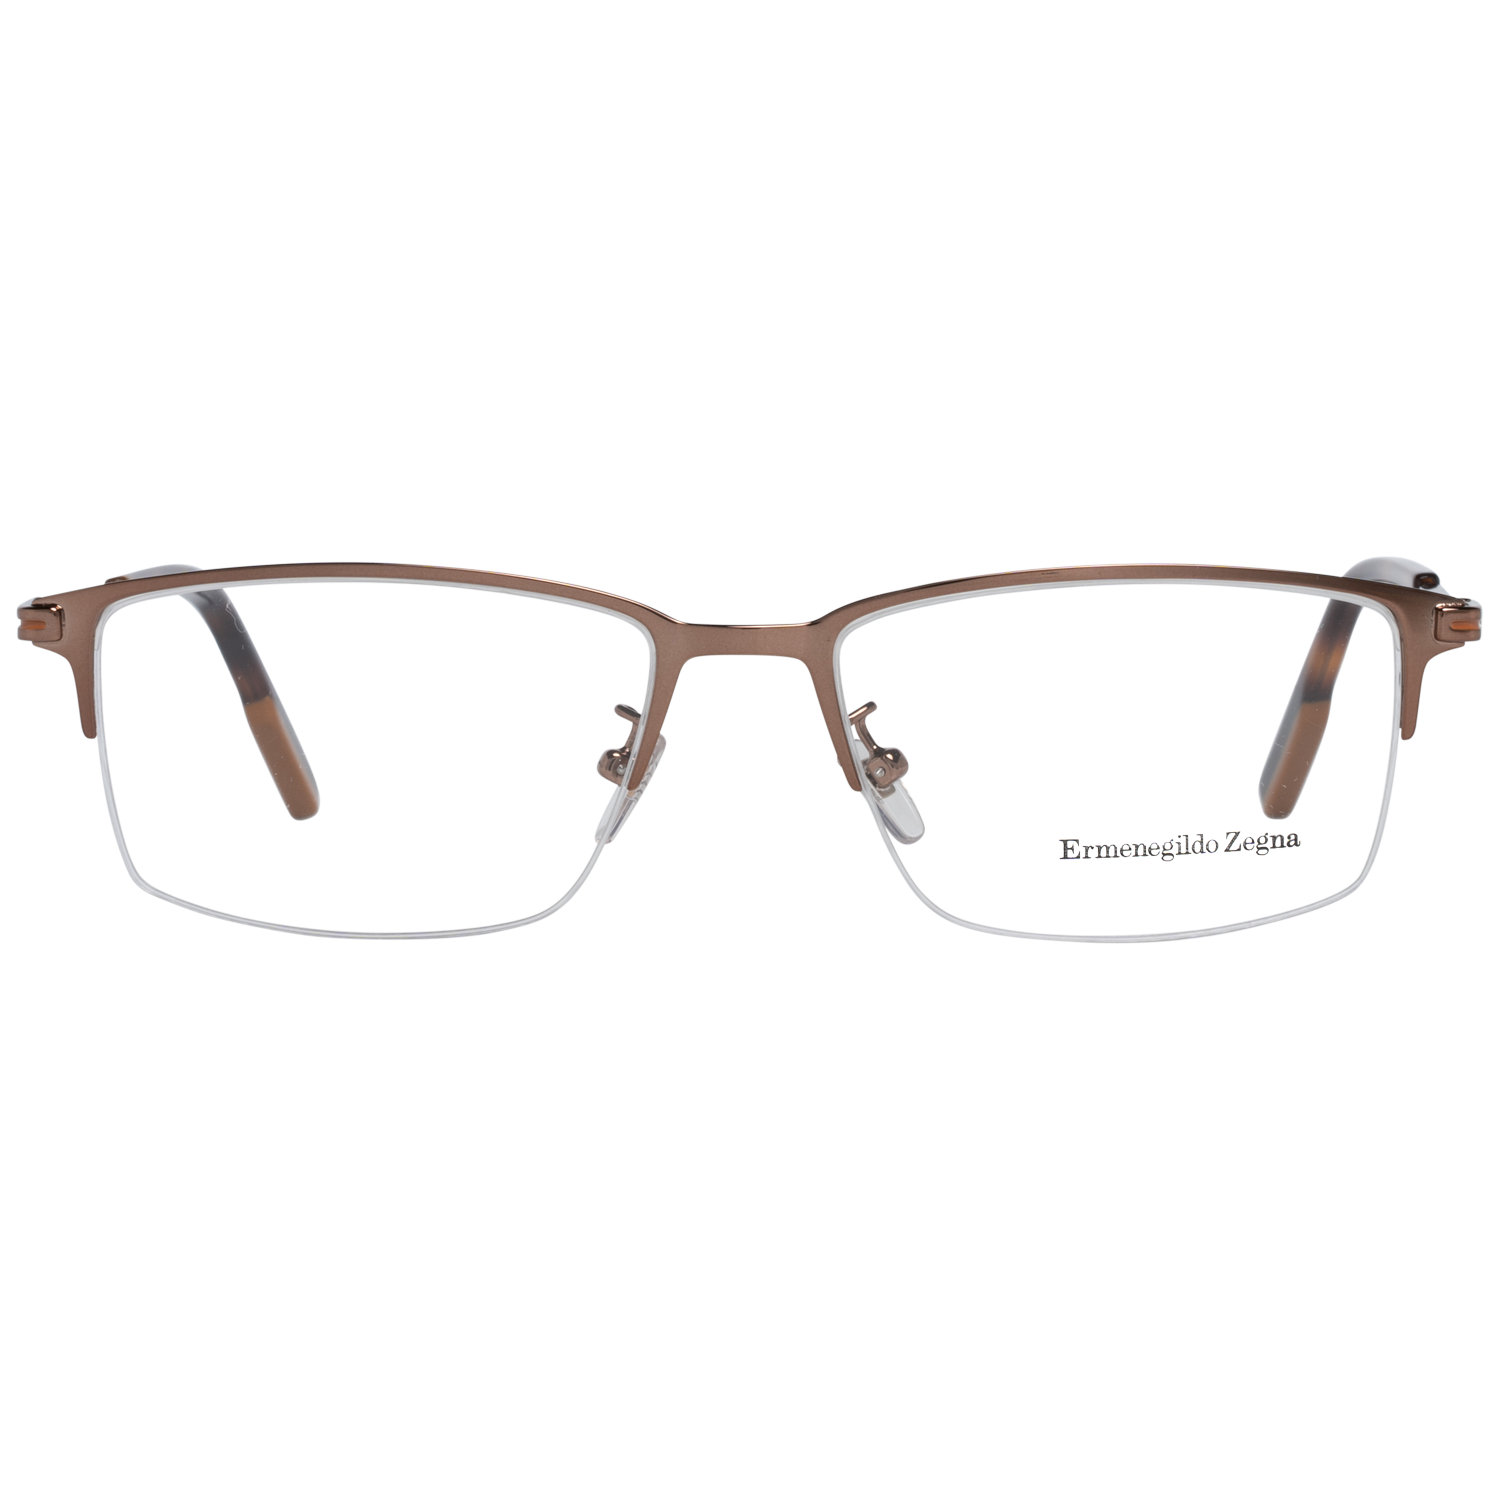 Ermenegildo Zegna Frames Ermenegildo Zegna Glasses Optical Frame EZ5155-D 036 55 Eyeglasses Eyewear UK USA Australia 